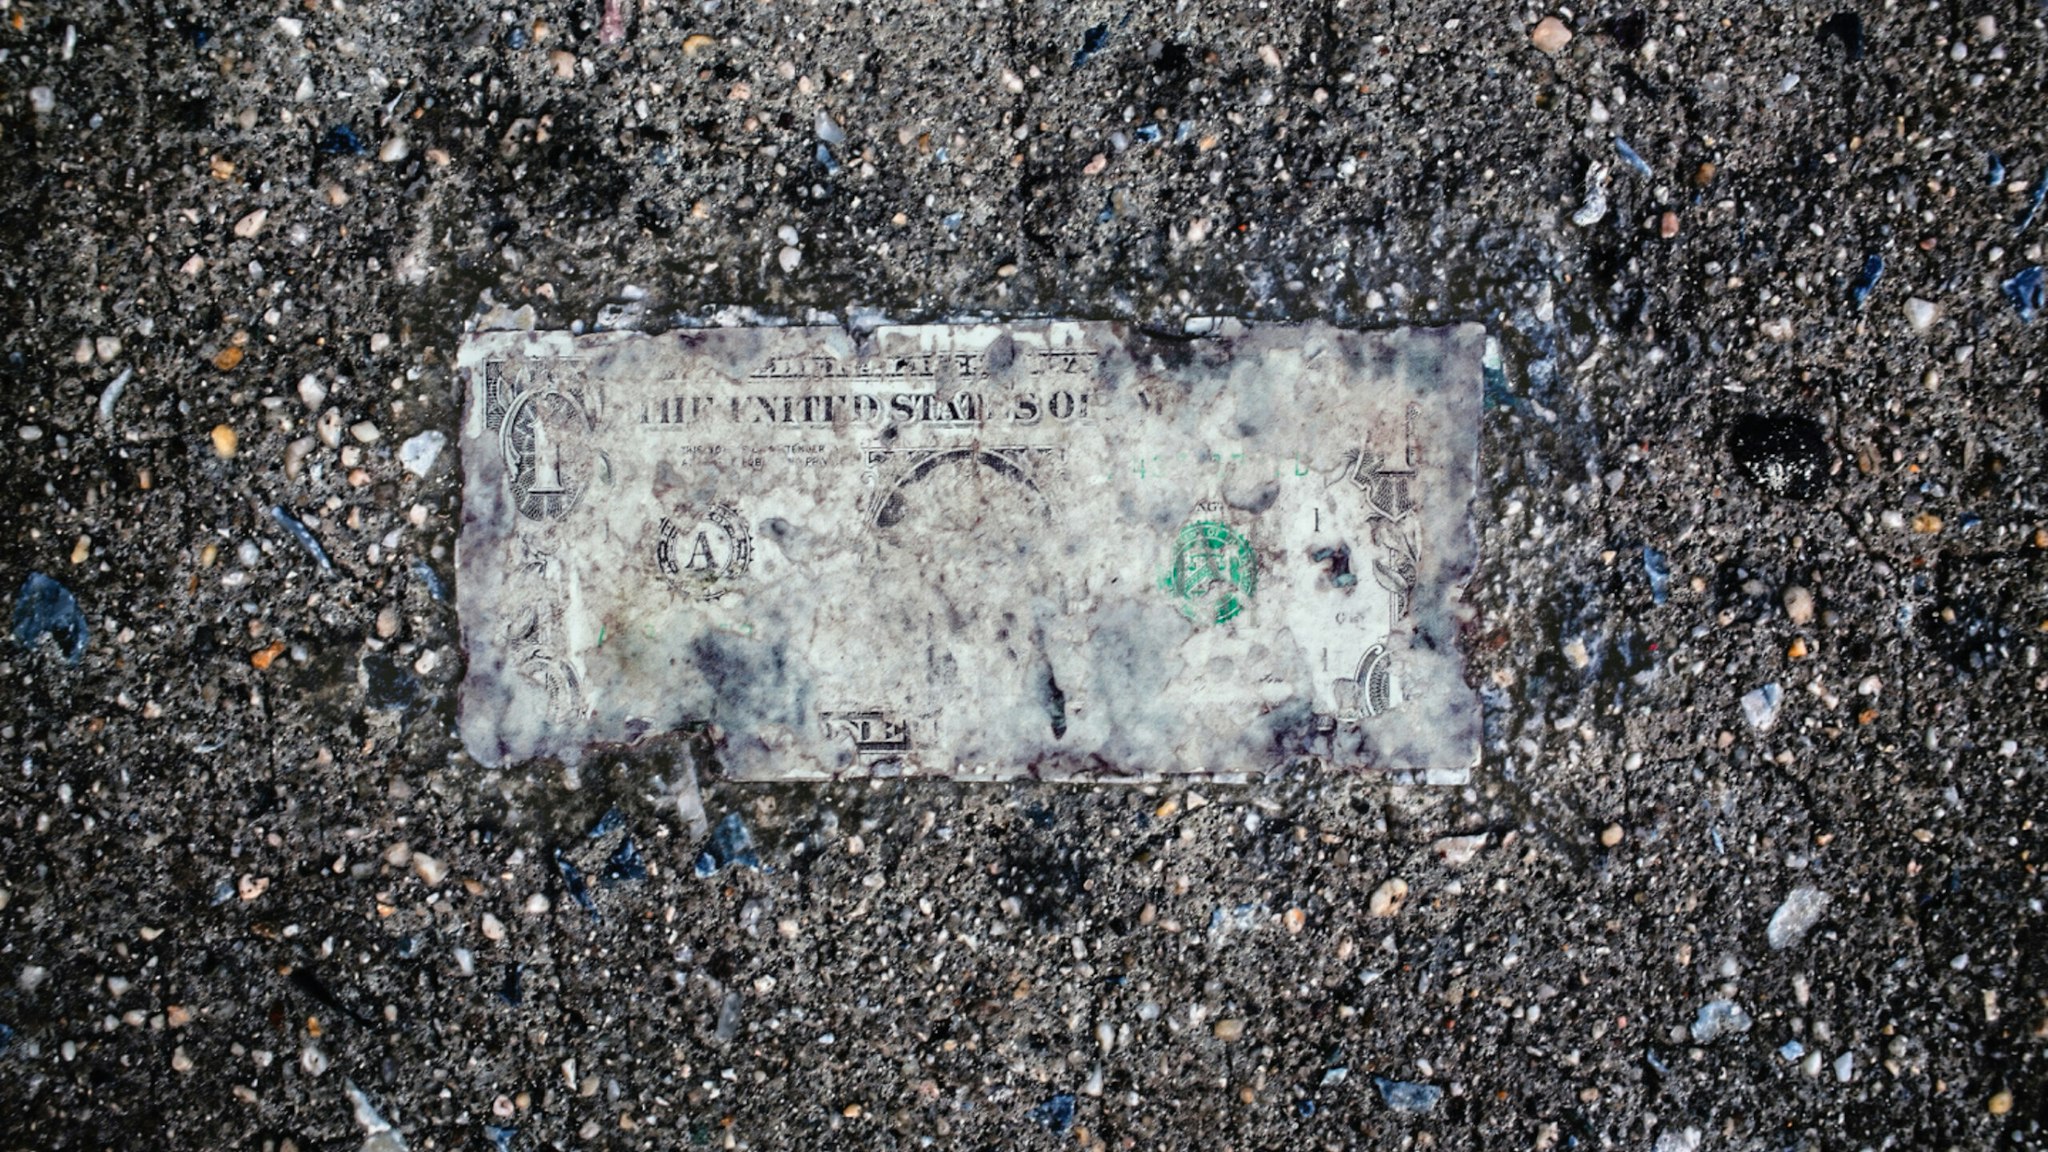 Still life of deteriorating one dollar bill on wet pavement.